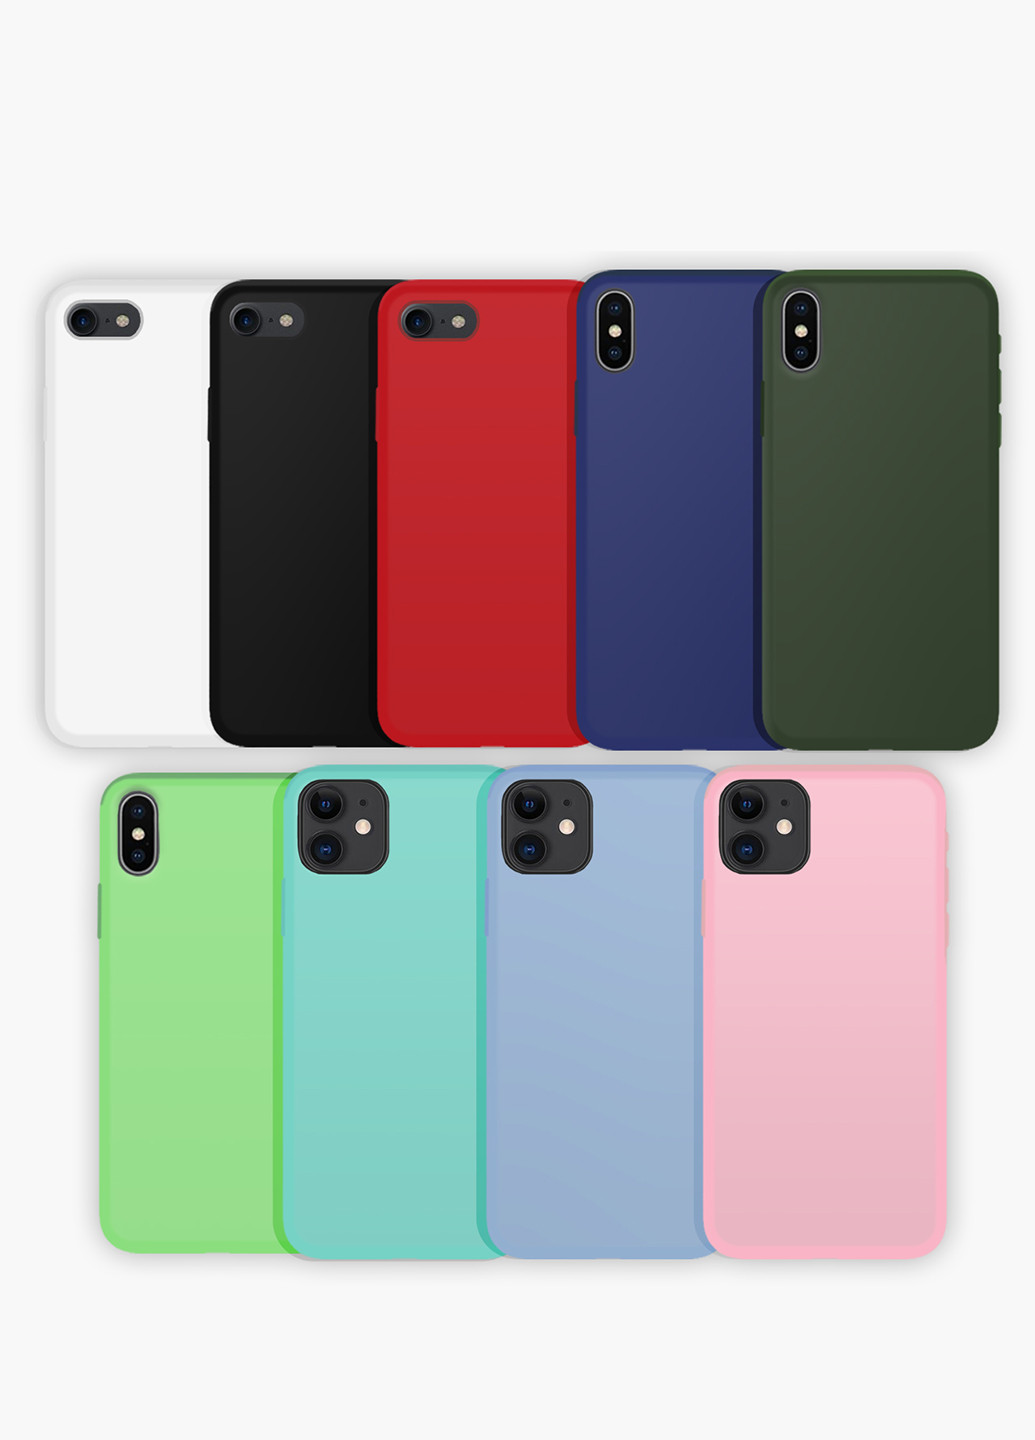 Чехол силиконовый Apple Iphone 8 plus Лайк (Likee) (6154-1711) MobiPrint (219778129)